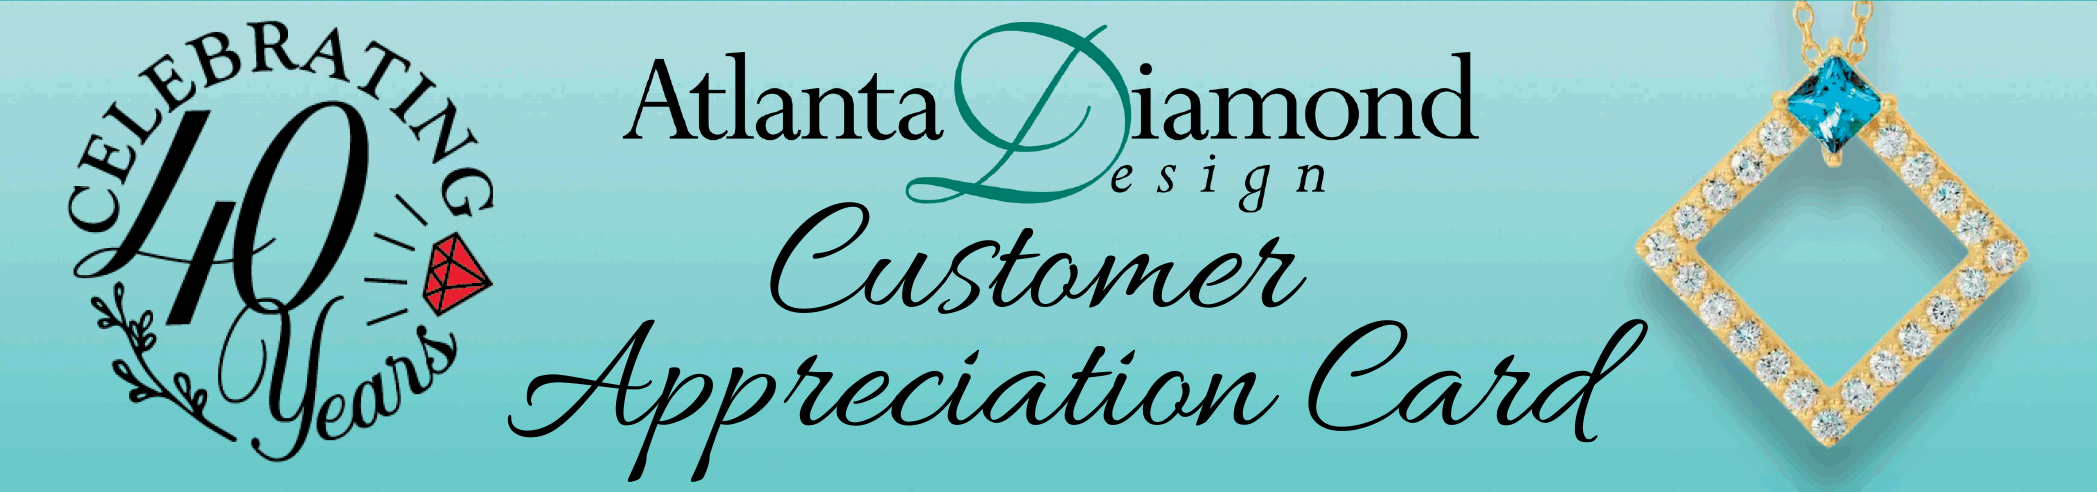 Atlanta Diamond Design Customer Appreciation Card